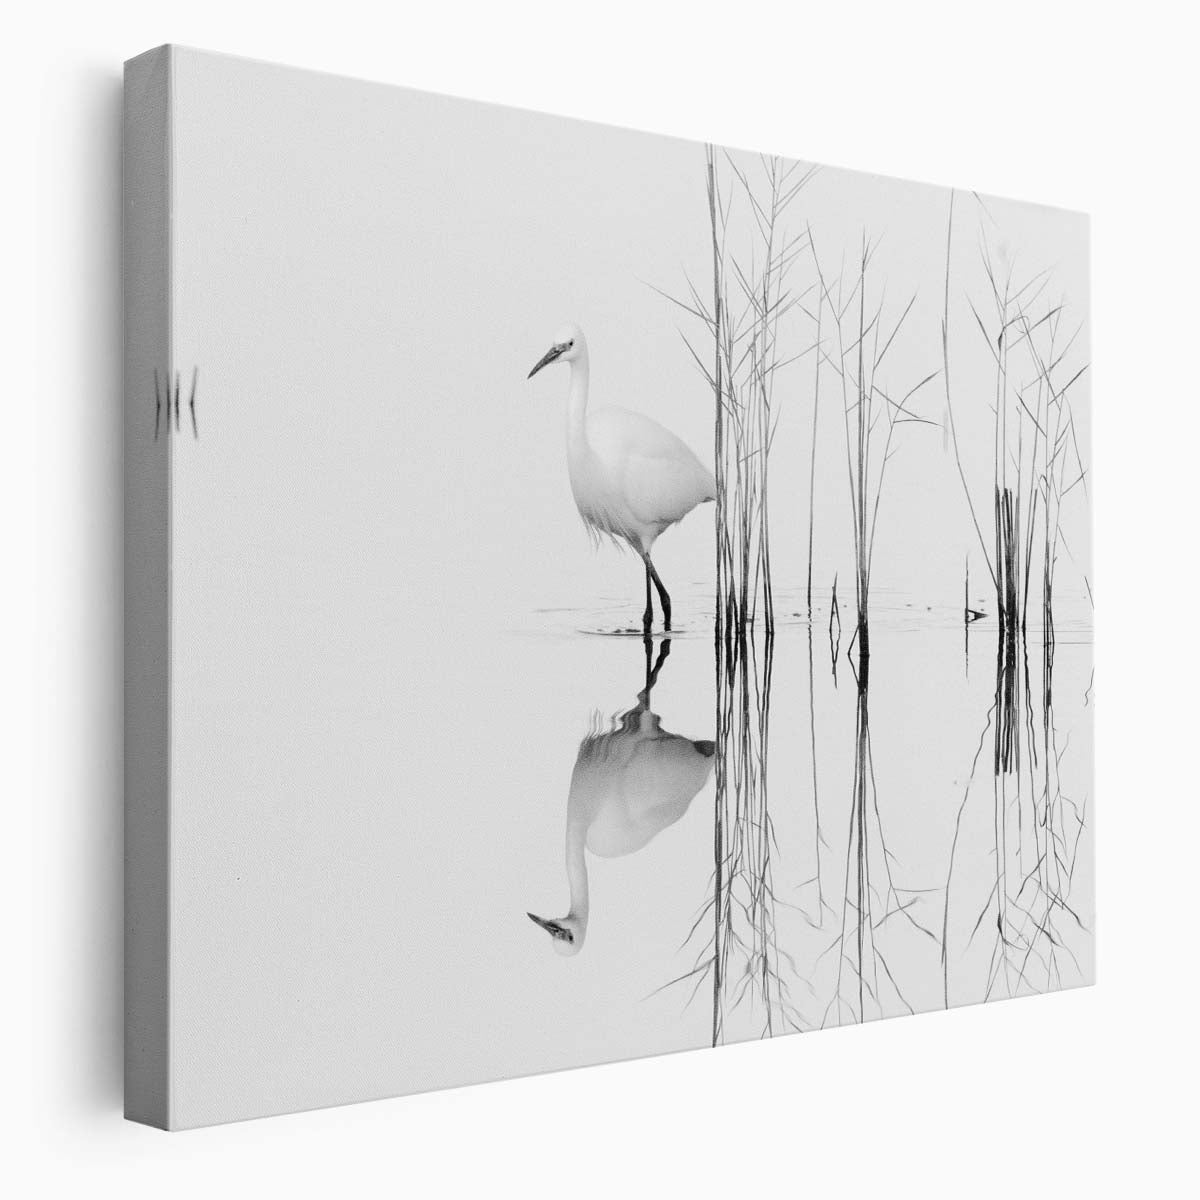 Minimalist White Bird Reflection Monochrome Wall Art by Luxuriance Designs. Made in USA.